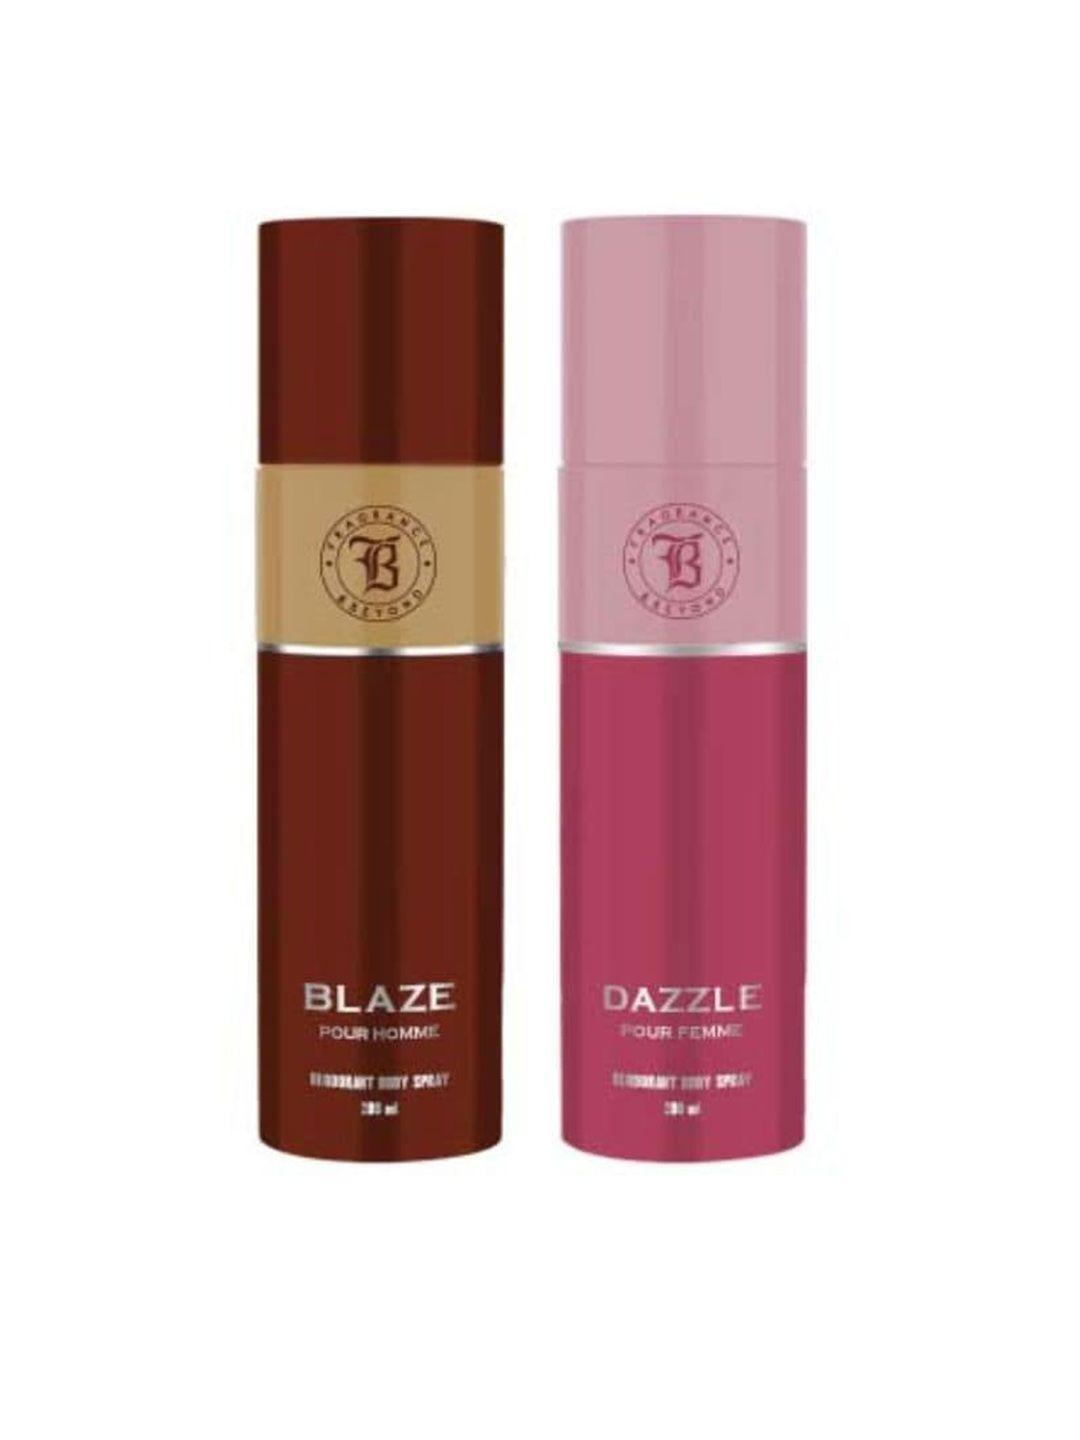 fragrance & beyond set of men blaze & women dazzle deodorant body sprays - 200 ml each